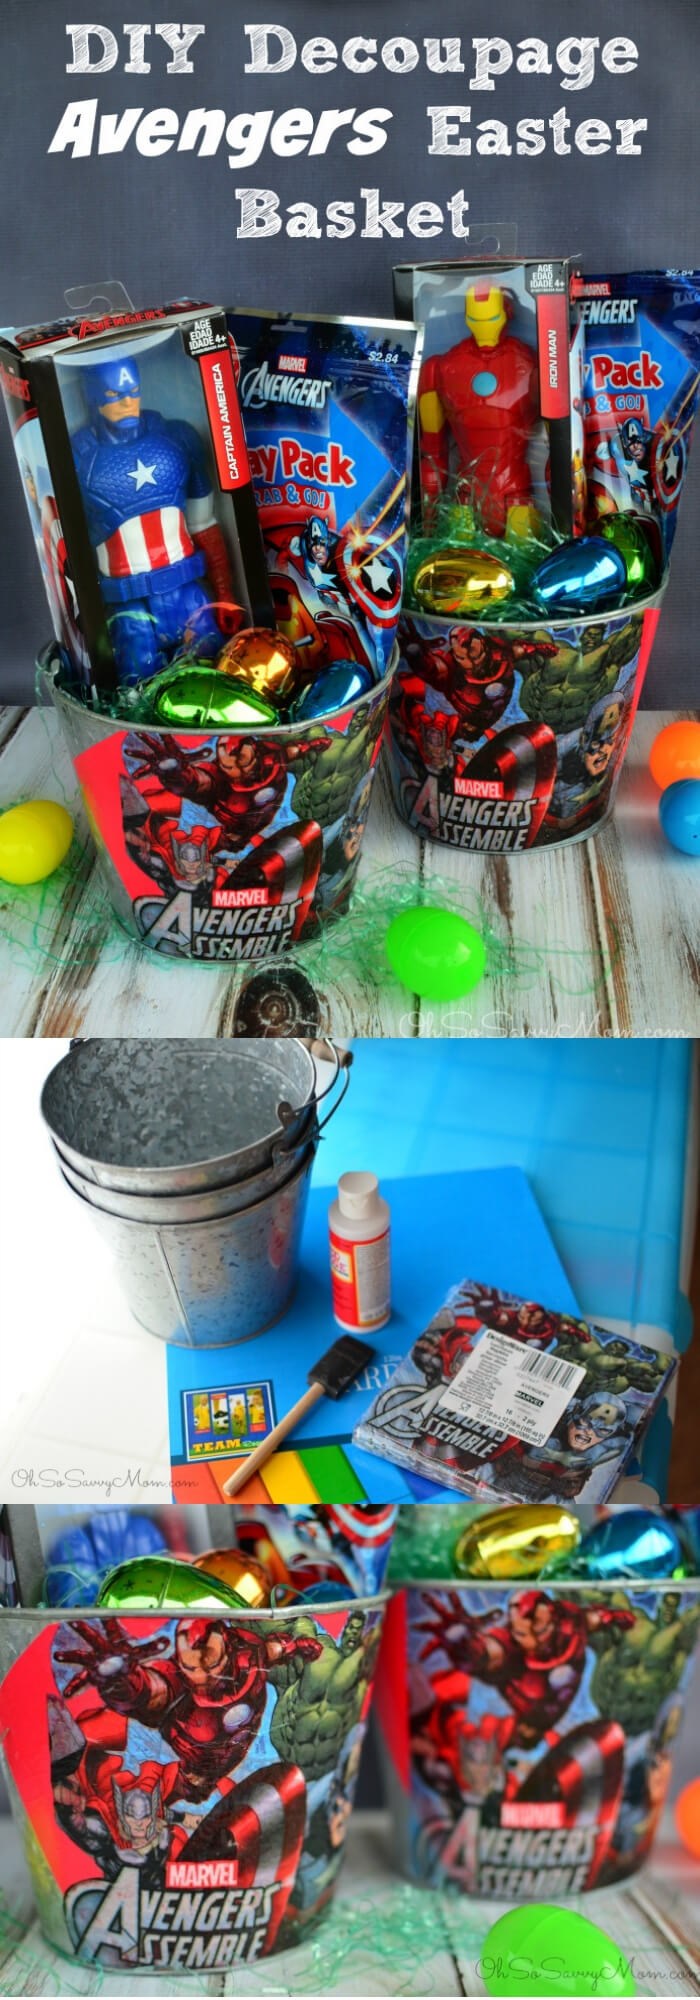 Decoupage DIY Avengers Easter Basket | Fun & Creative Easter Basket Ideas